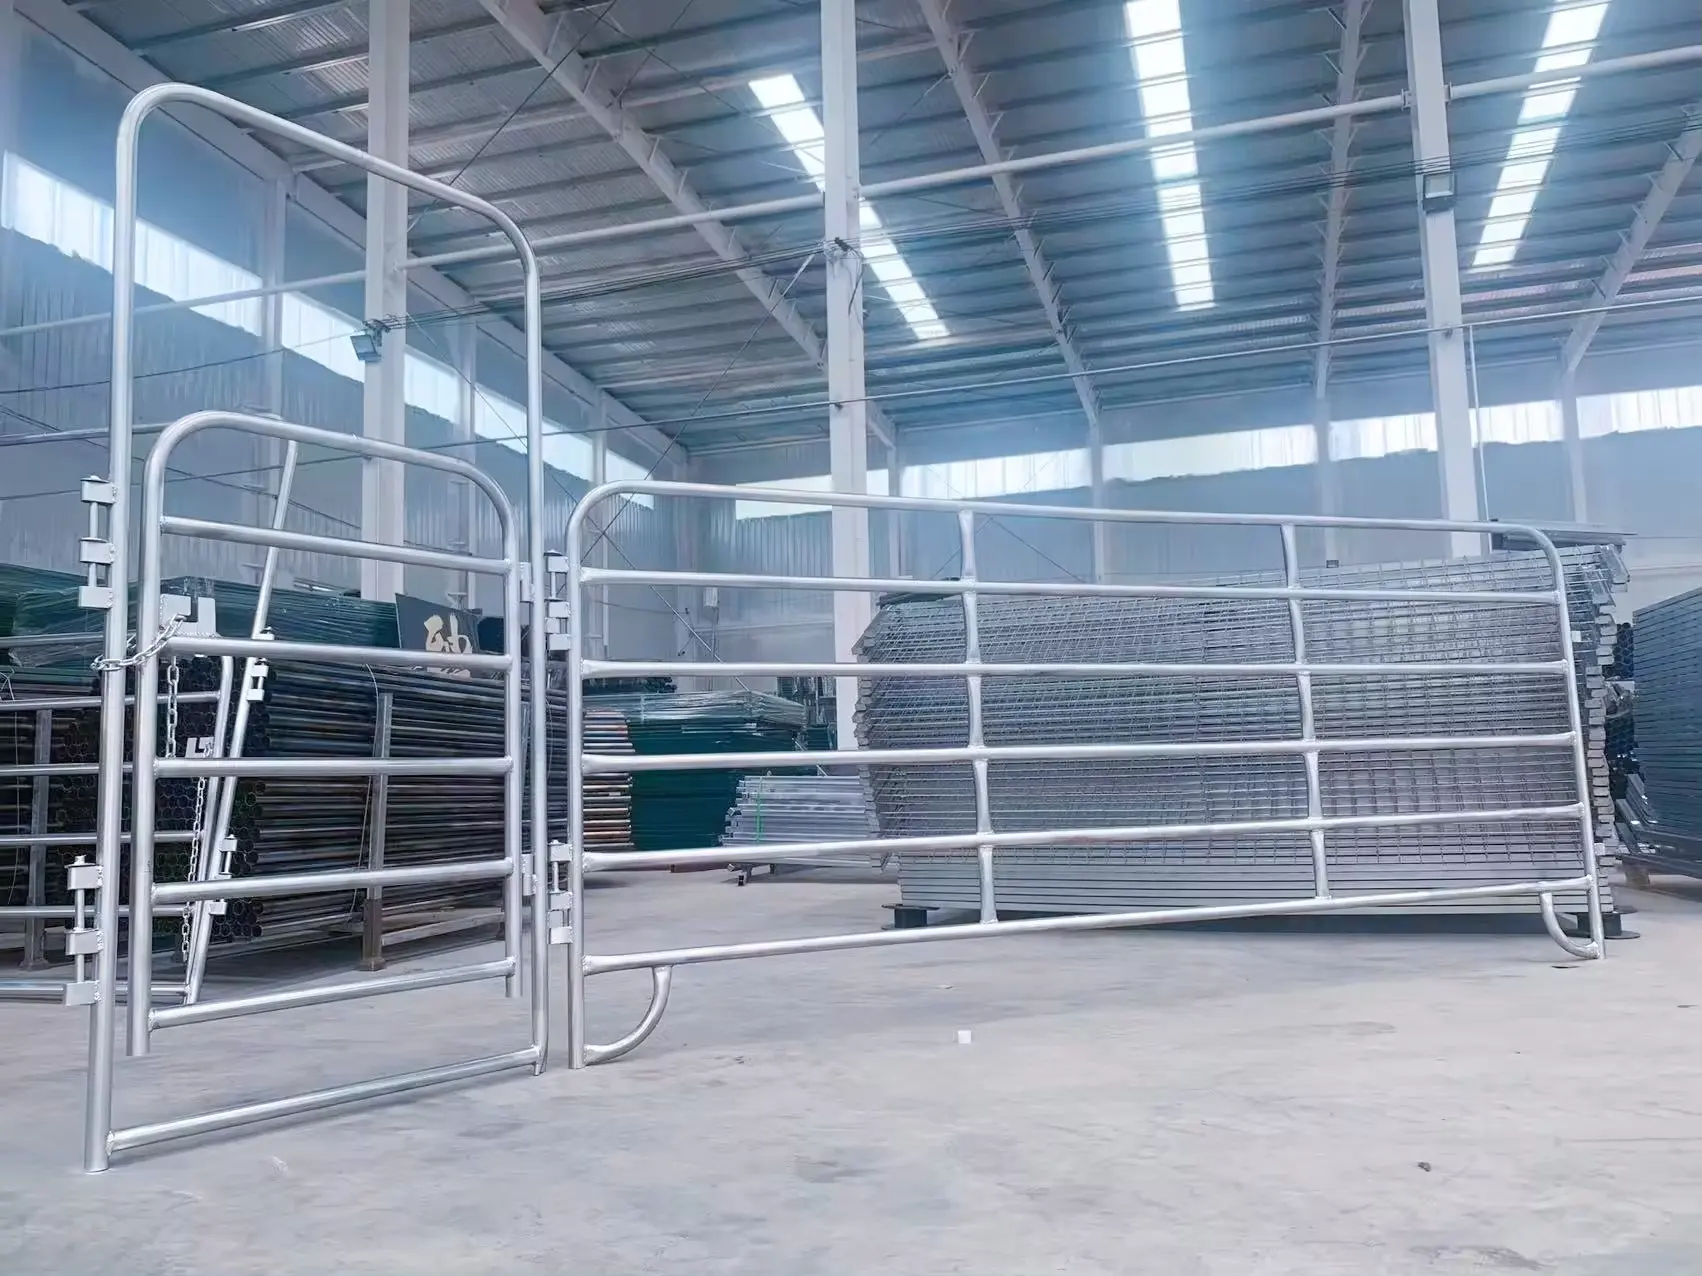 Galvanized 6ft 12ft heavy duty used metal horse fence panels/Round pen panels Livestock Cattle Panels/Horse Corral panels